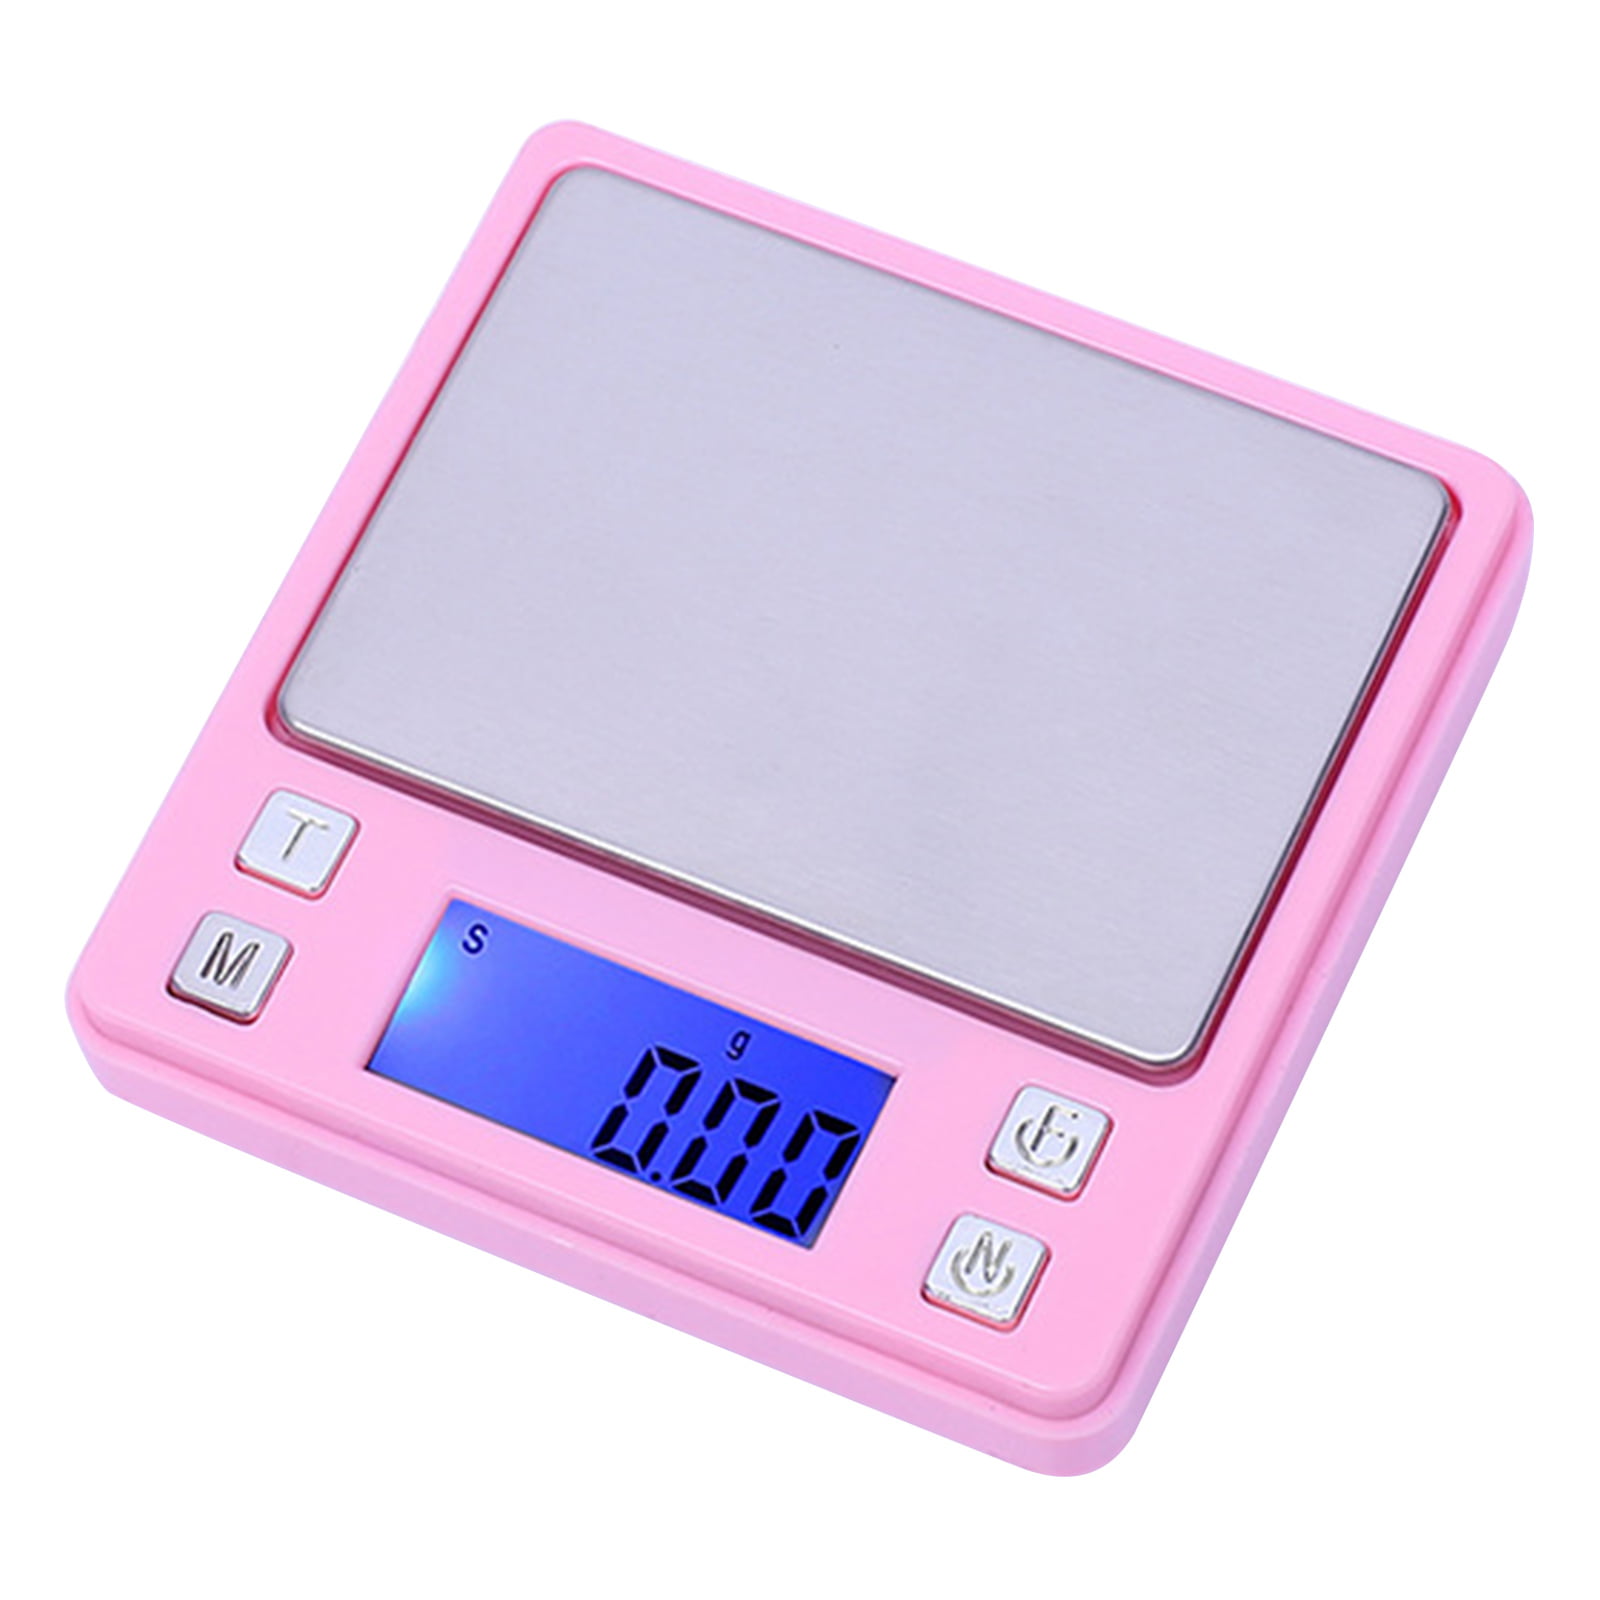 Surpahs Shiny Small Lightweight Digital Bathroom Scale w/ BMI Calculation,  Auto Identify 4 Users [Sachet Pink]